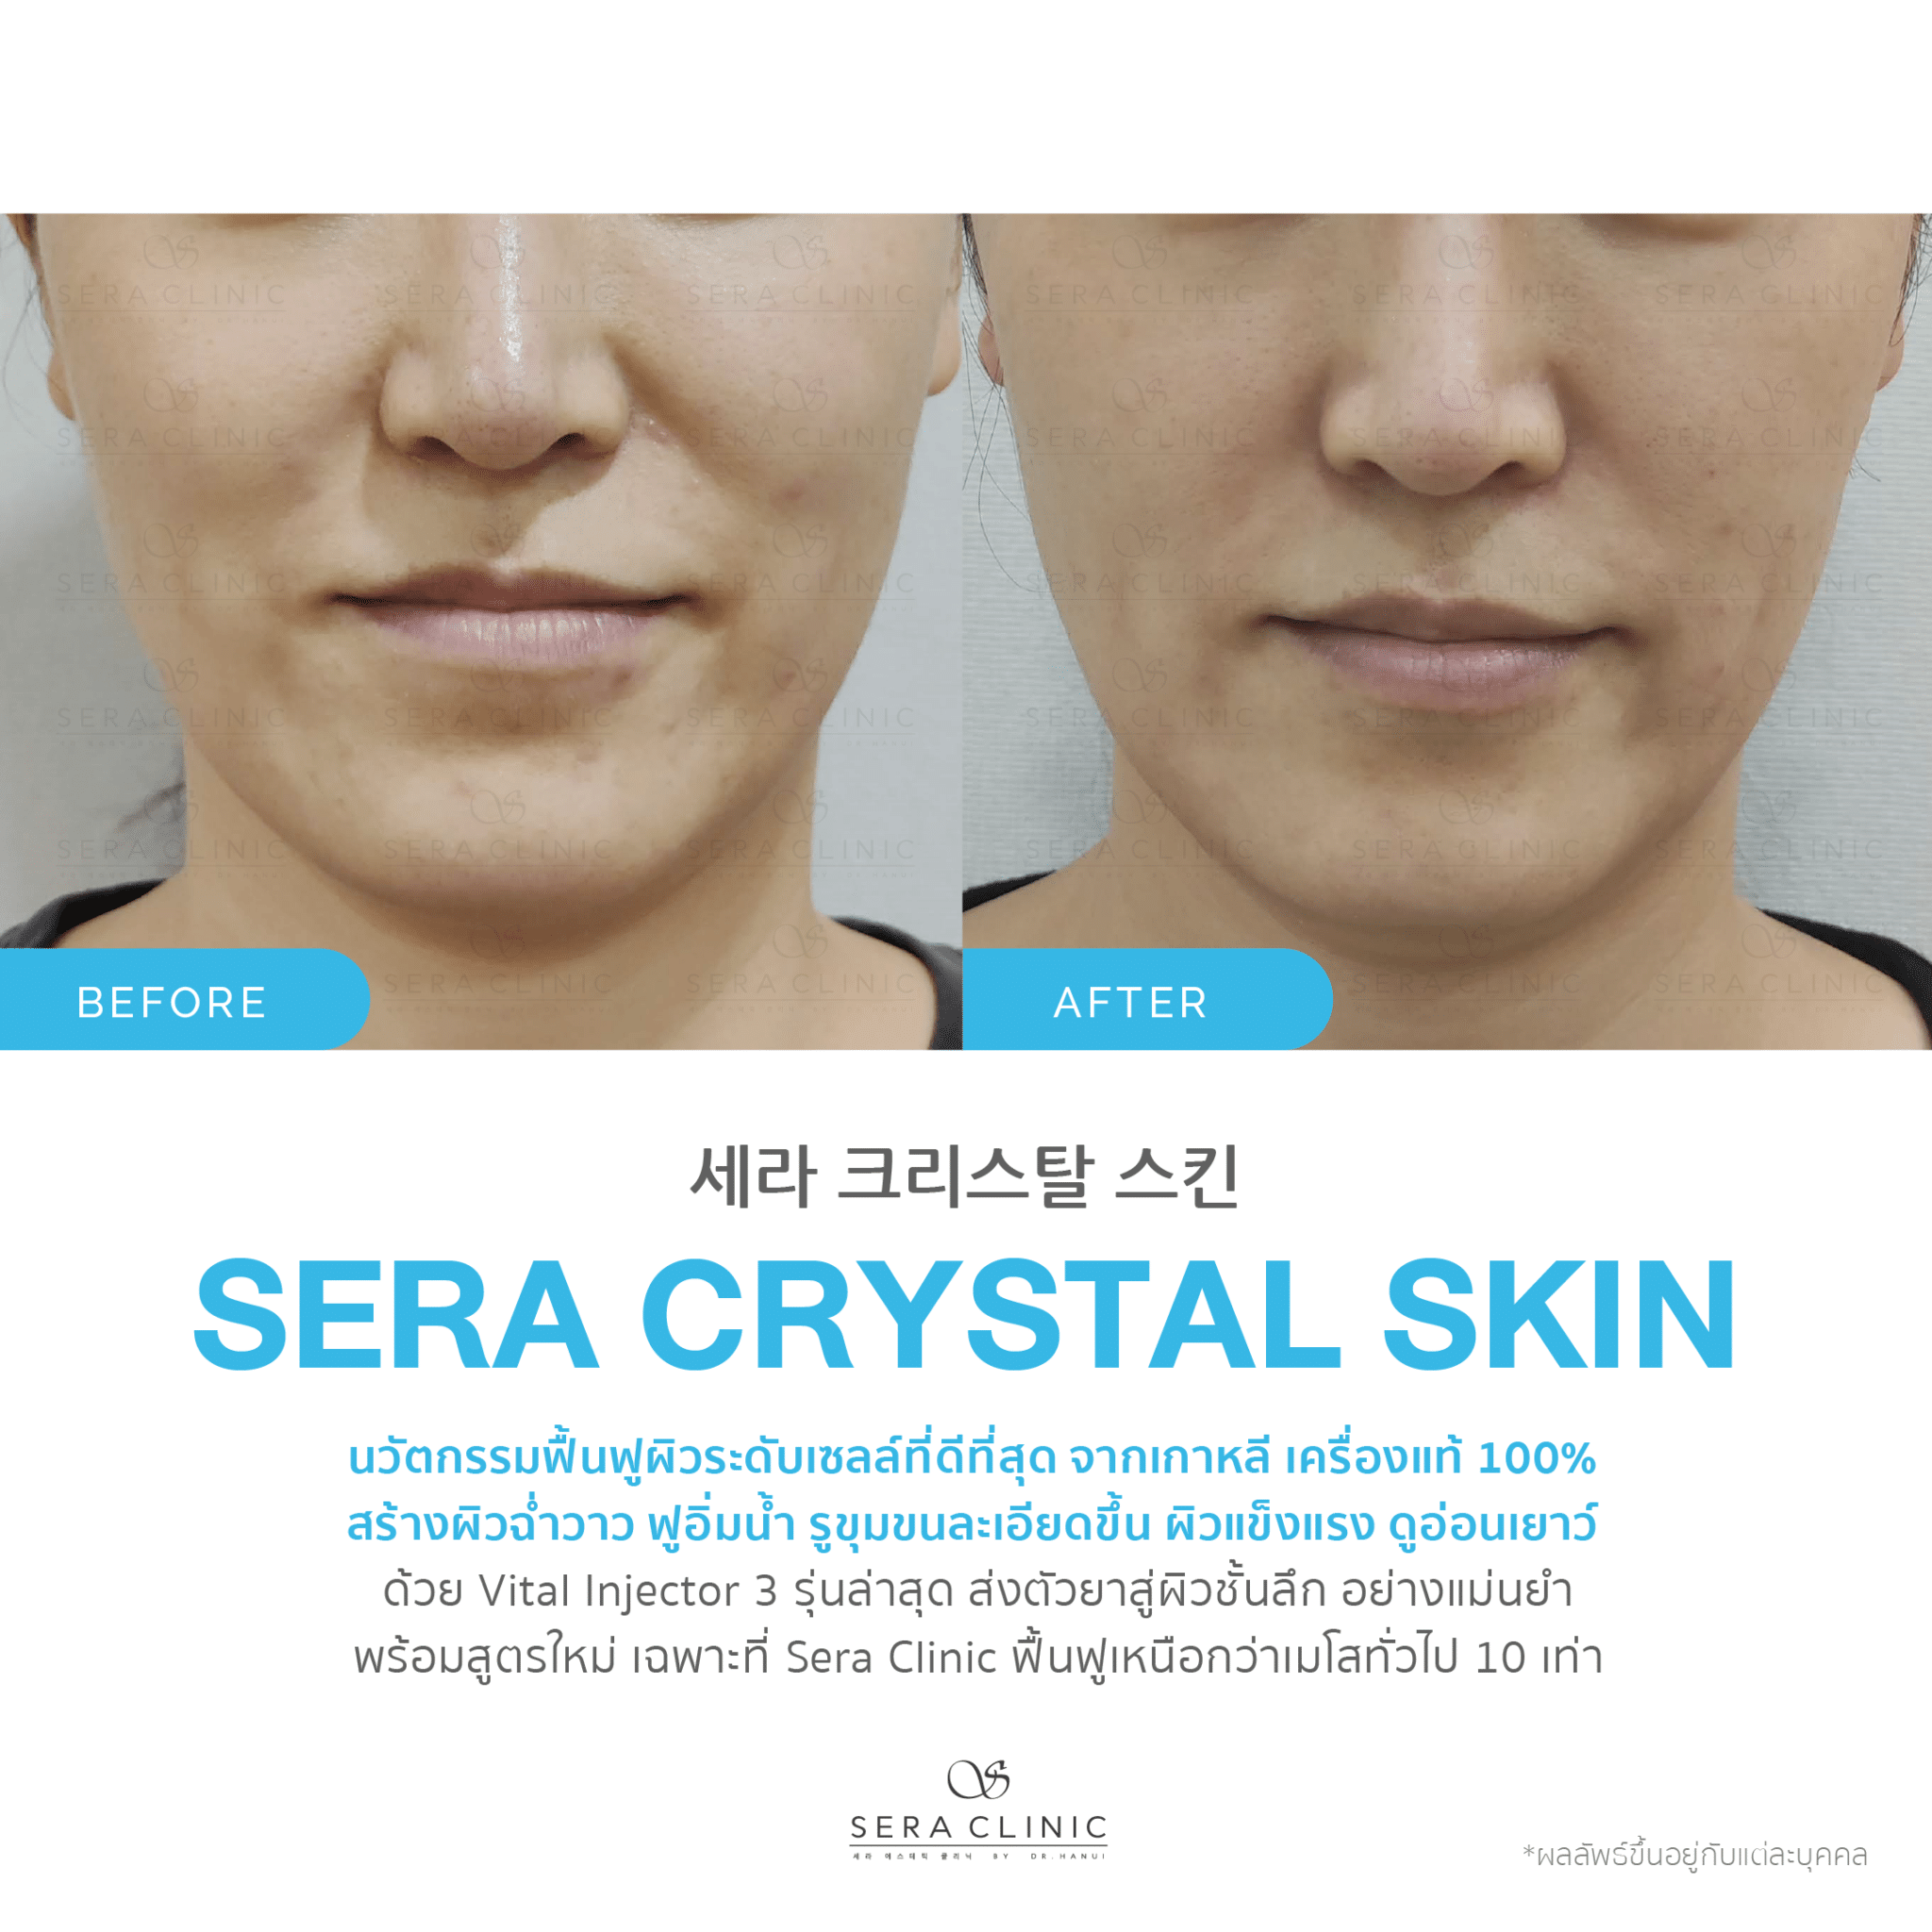 review รีวิว เซราคลินิก Sera Clinic Sera Crystal Skin นวัตกรรมเกาหลีขั้นสูง ฟื้นฟูผิวใส ลึกระดับเซลล์ หน้าฉ่ำวาว